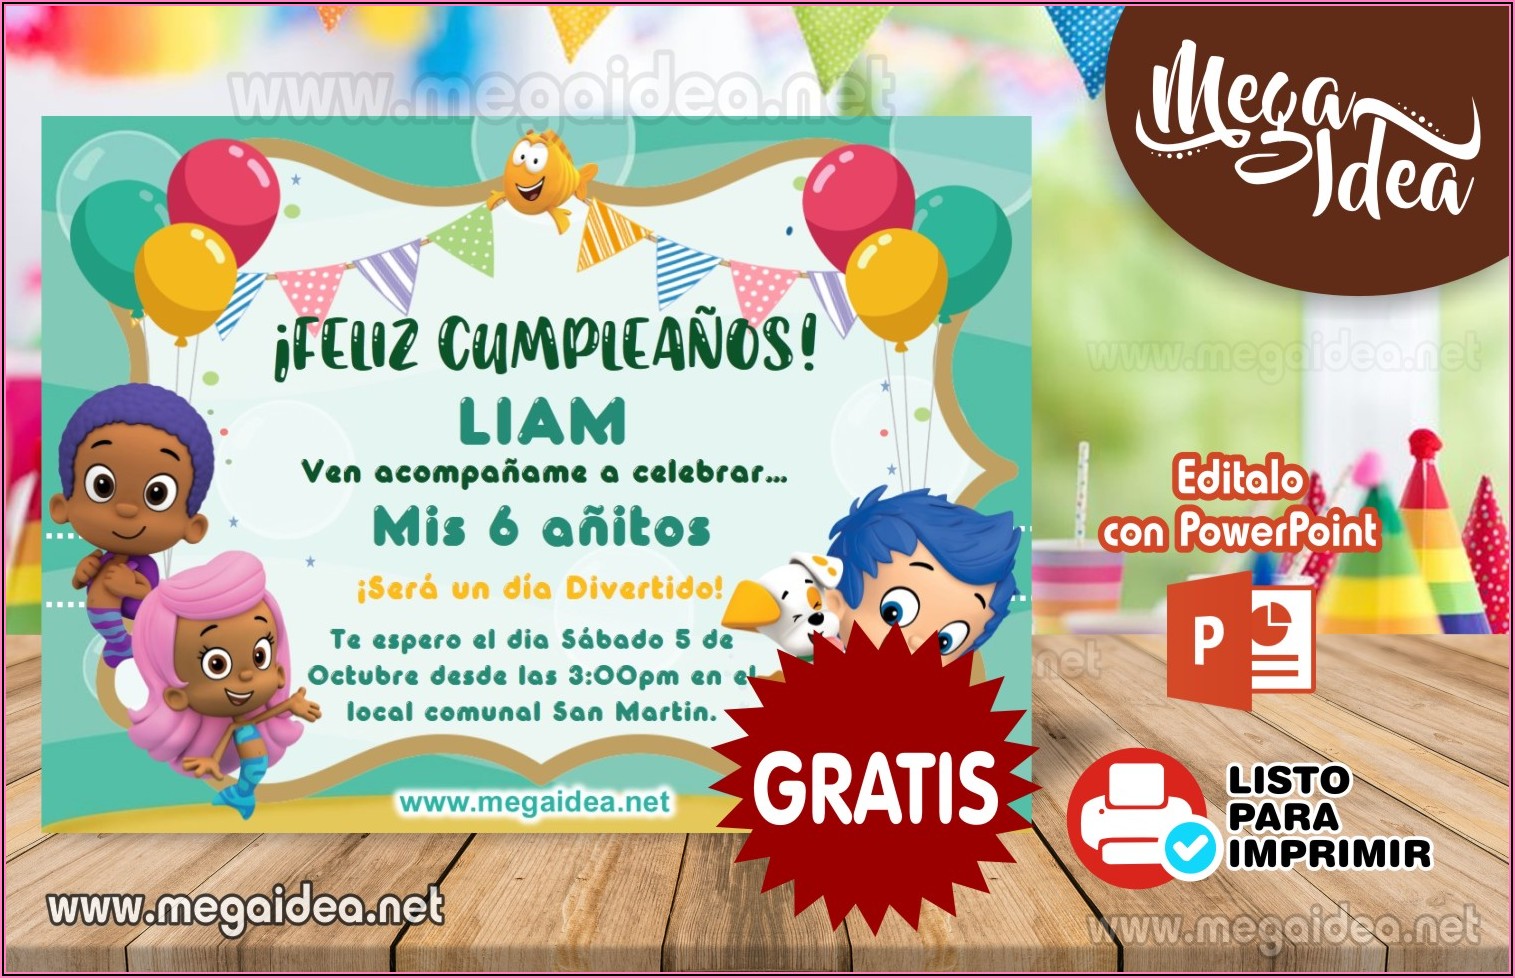 Bubble Guppies Birthday Invitations Online